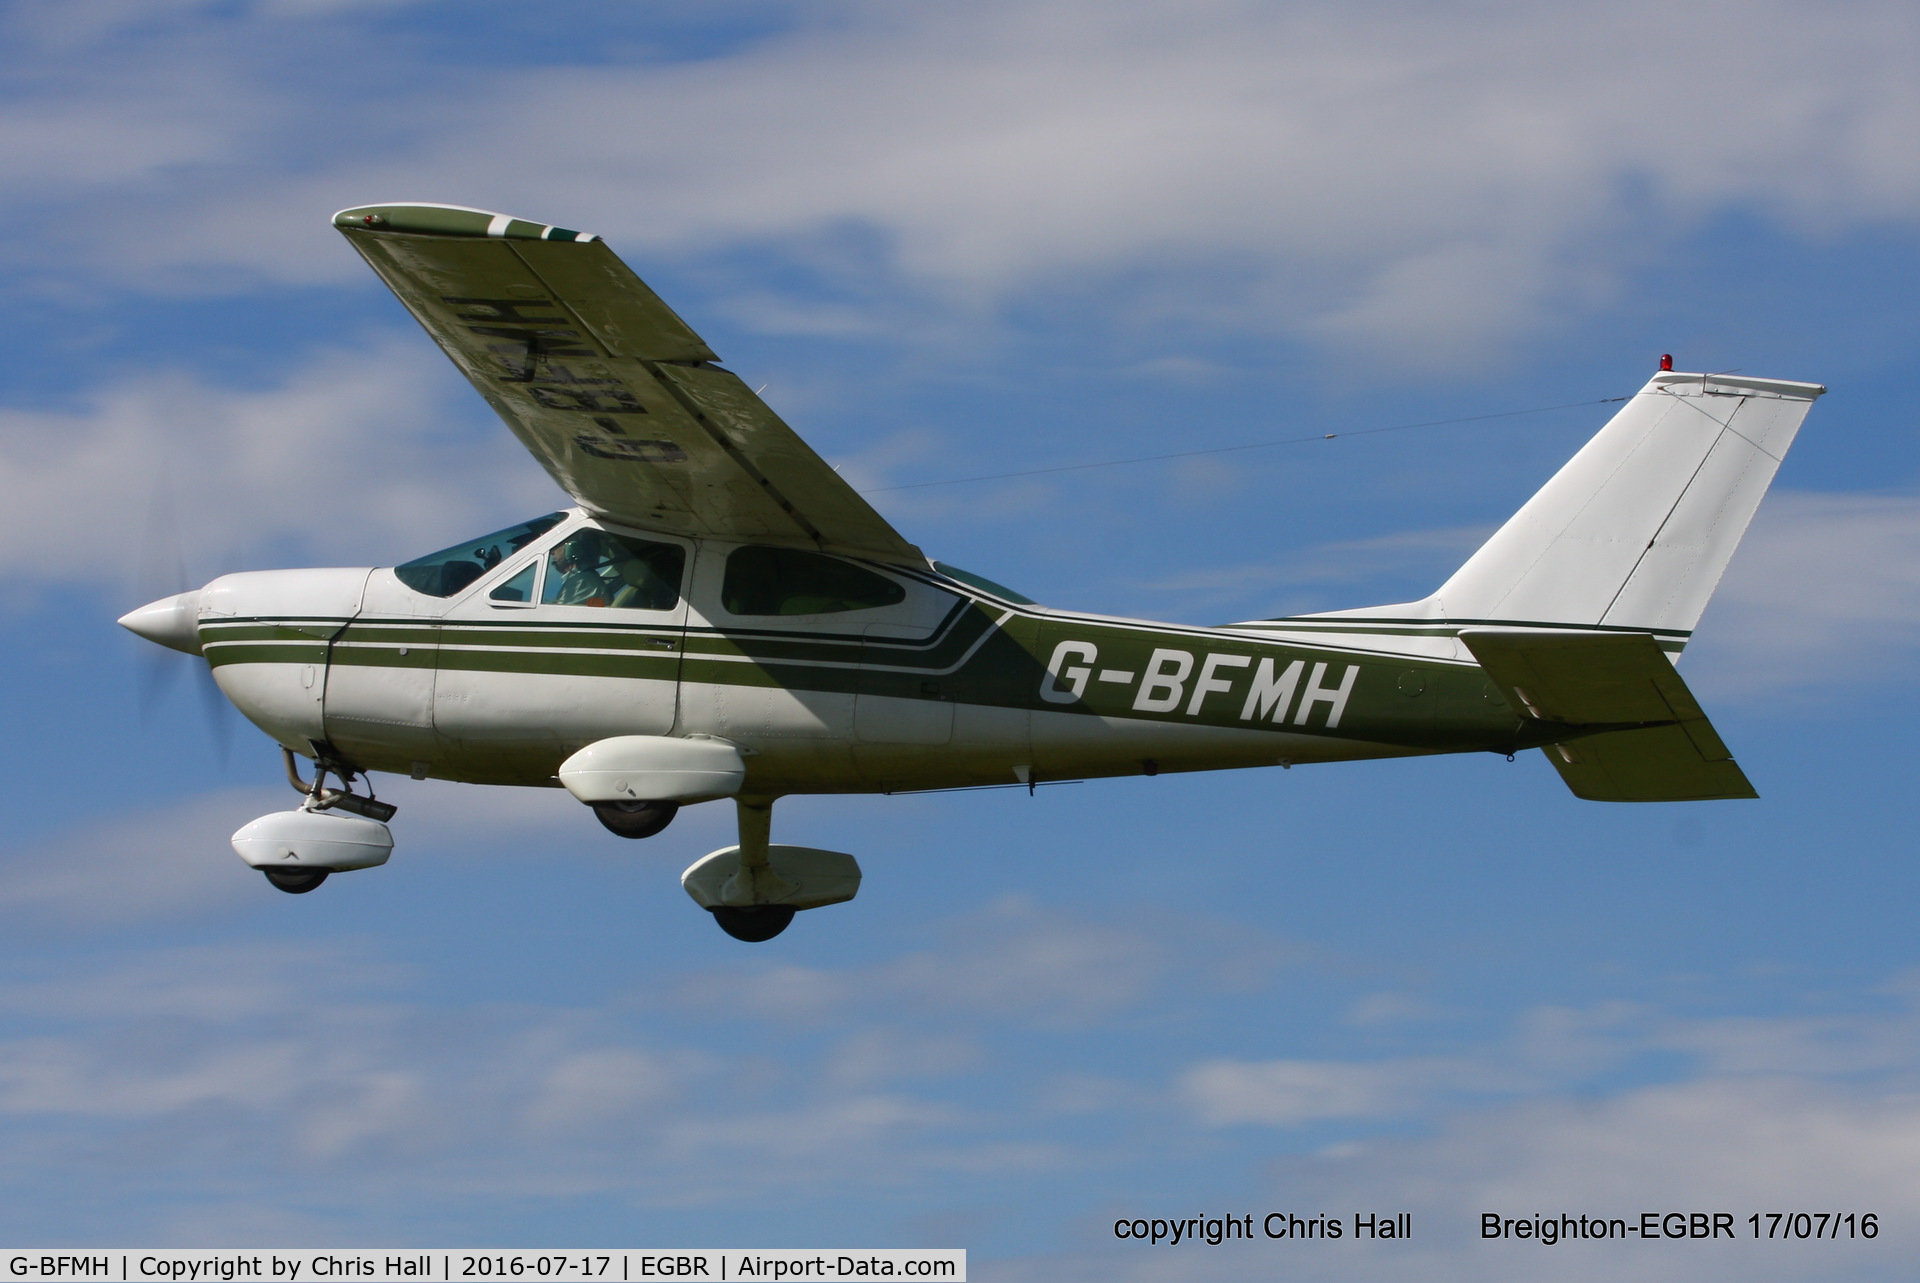 G-BFMH, 1973 Cessna 177B Cardinal C/N 17702034, at Breighton's Summer Fly-in